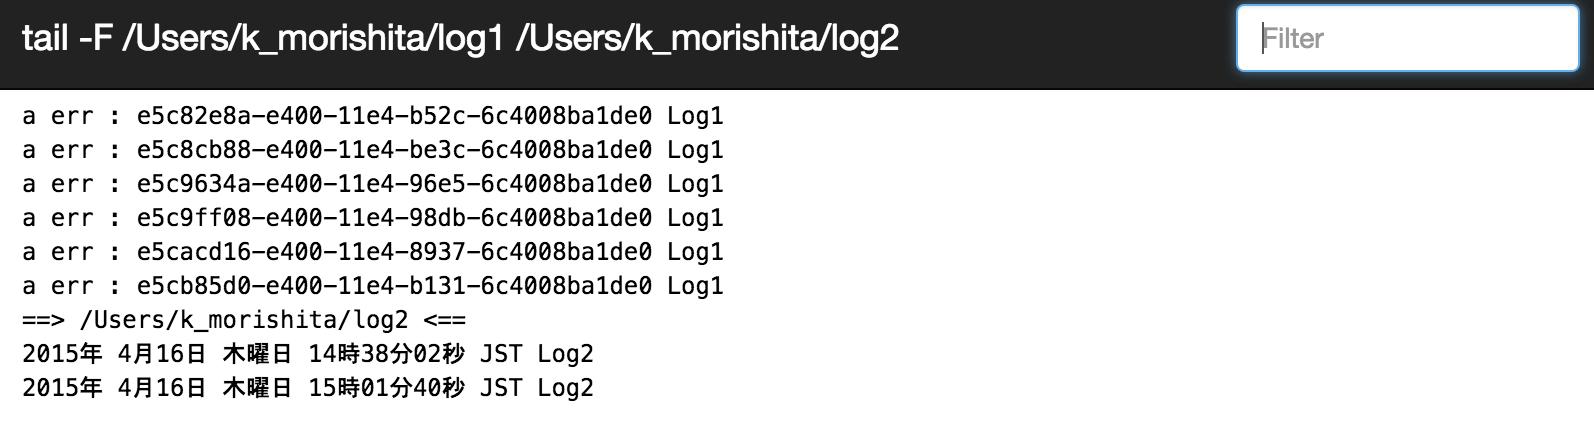 tail_-F__Users_k_morishita_log1__Users_k_morishita_log2.png